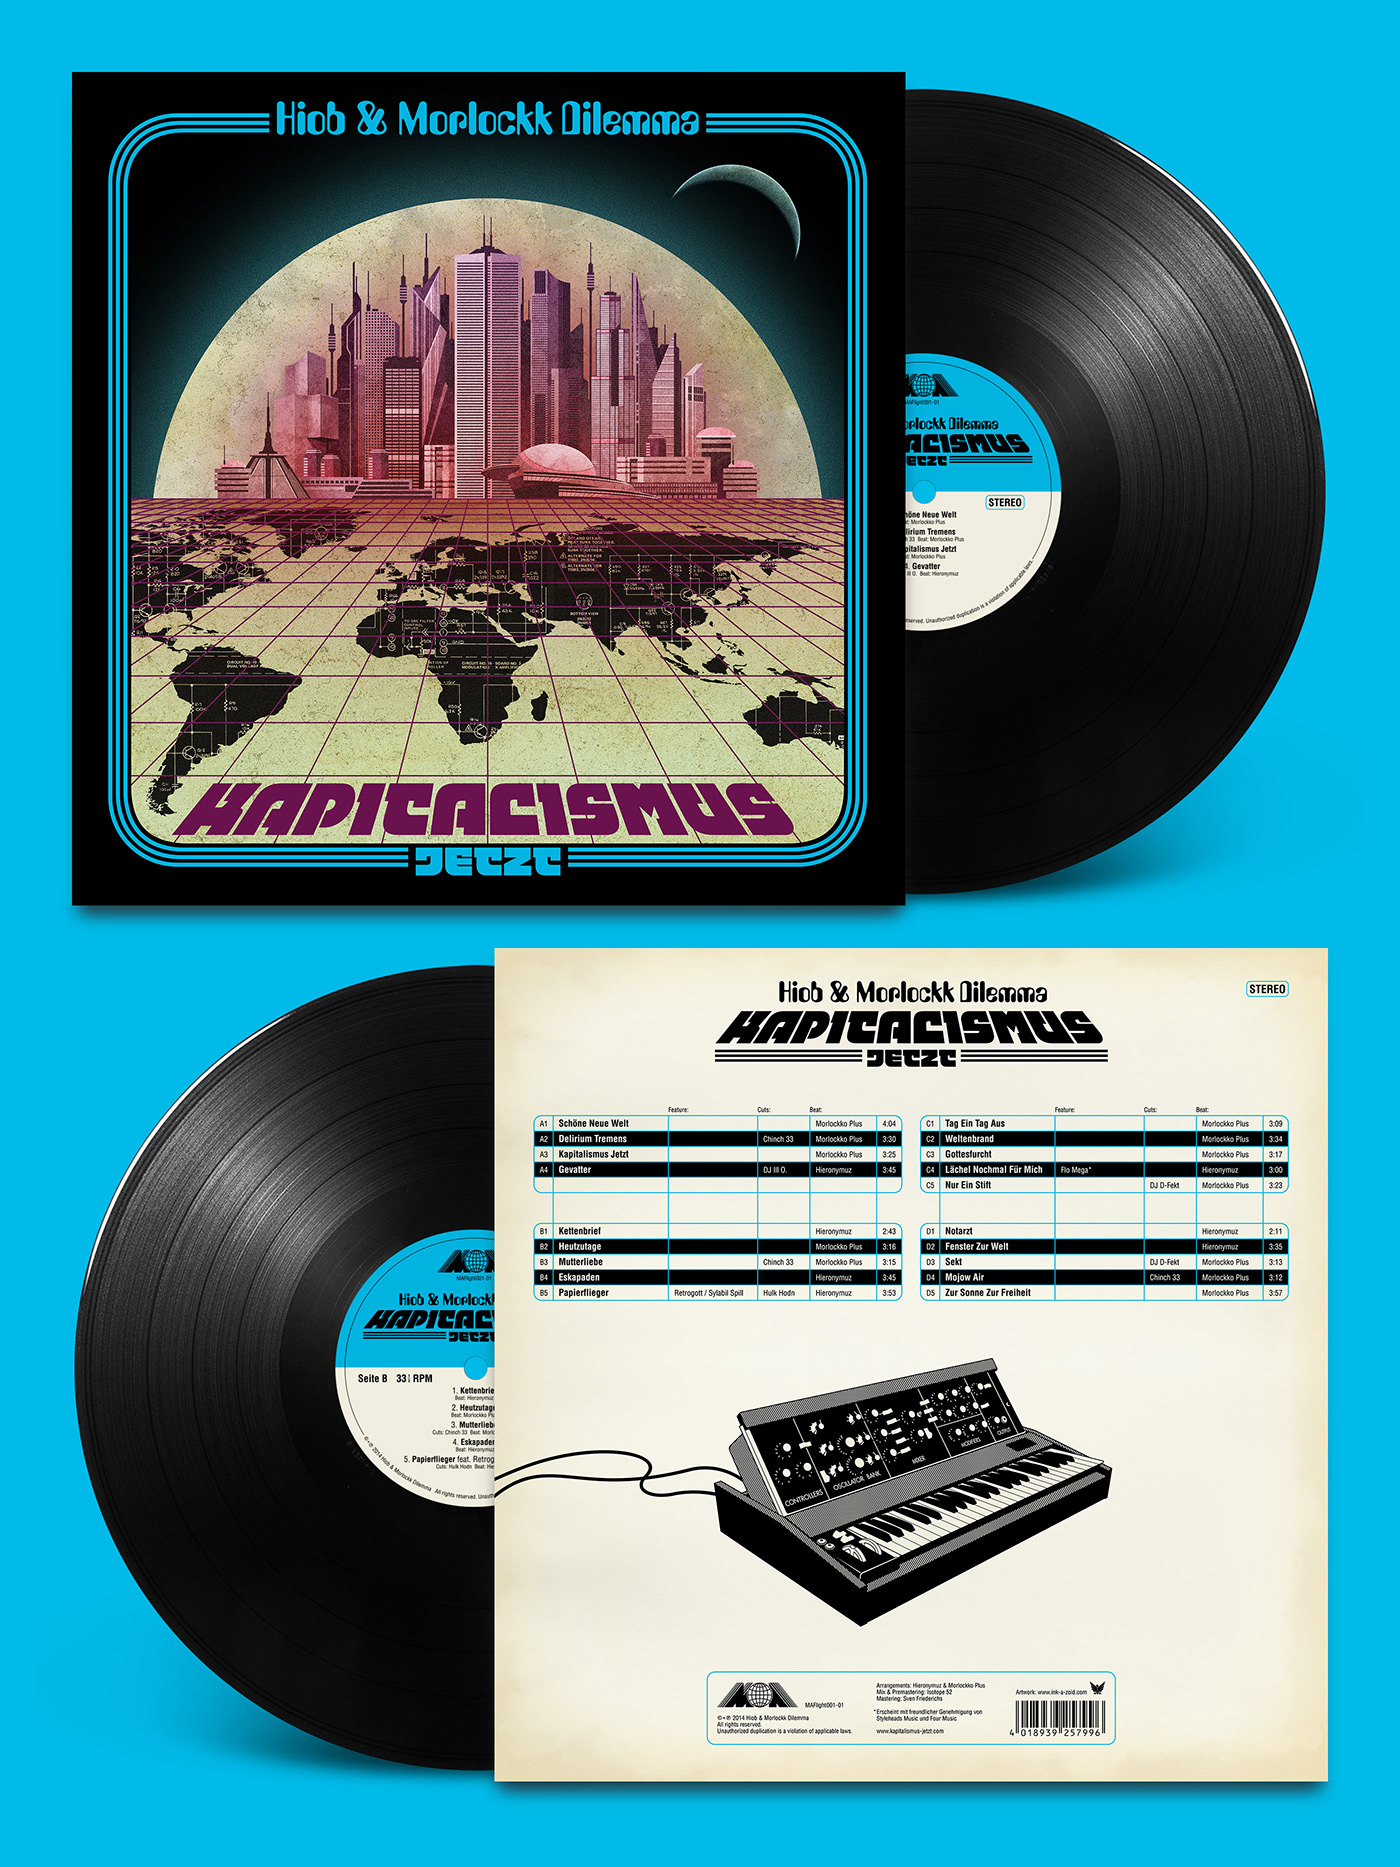 Retro cover vinyl record vector architecture moog synthesizer record cover